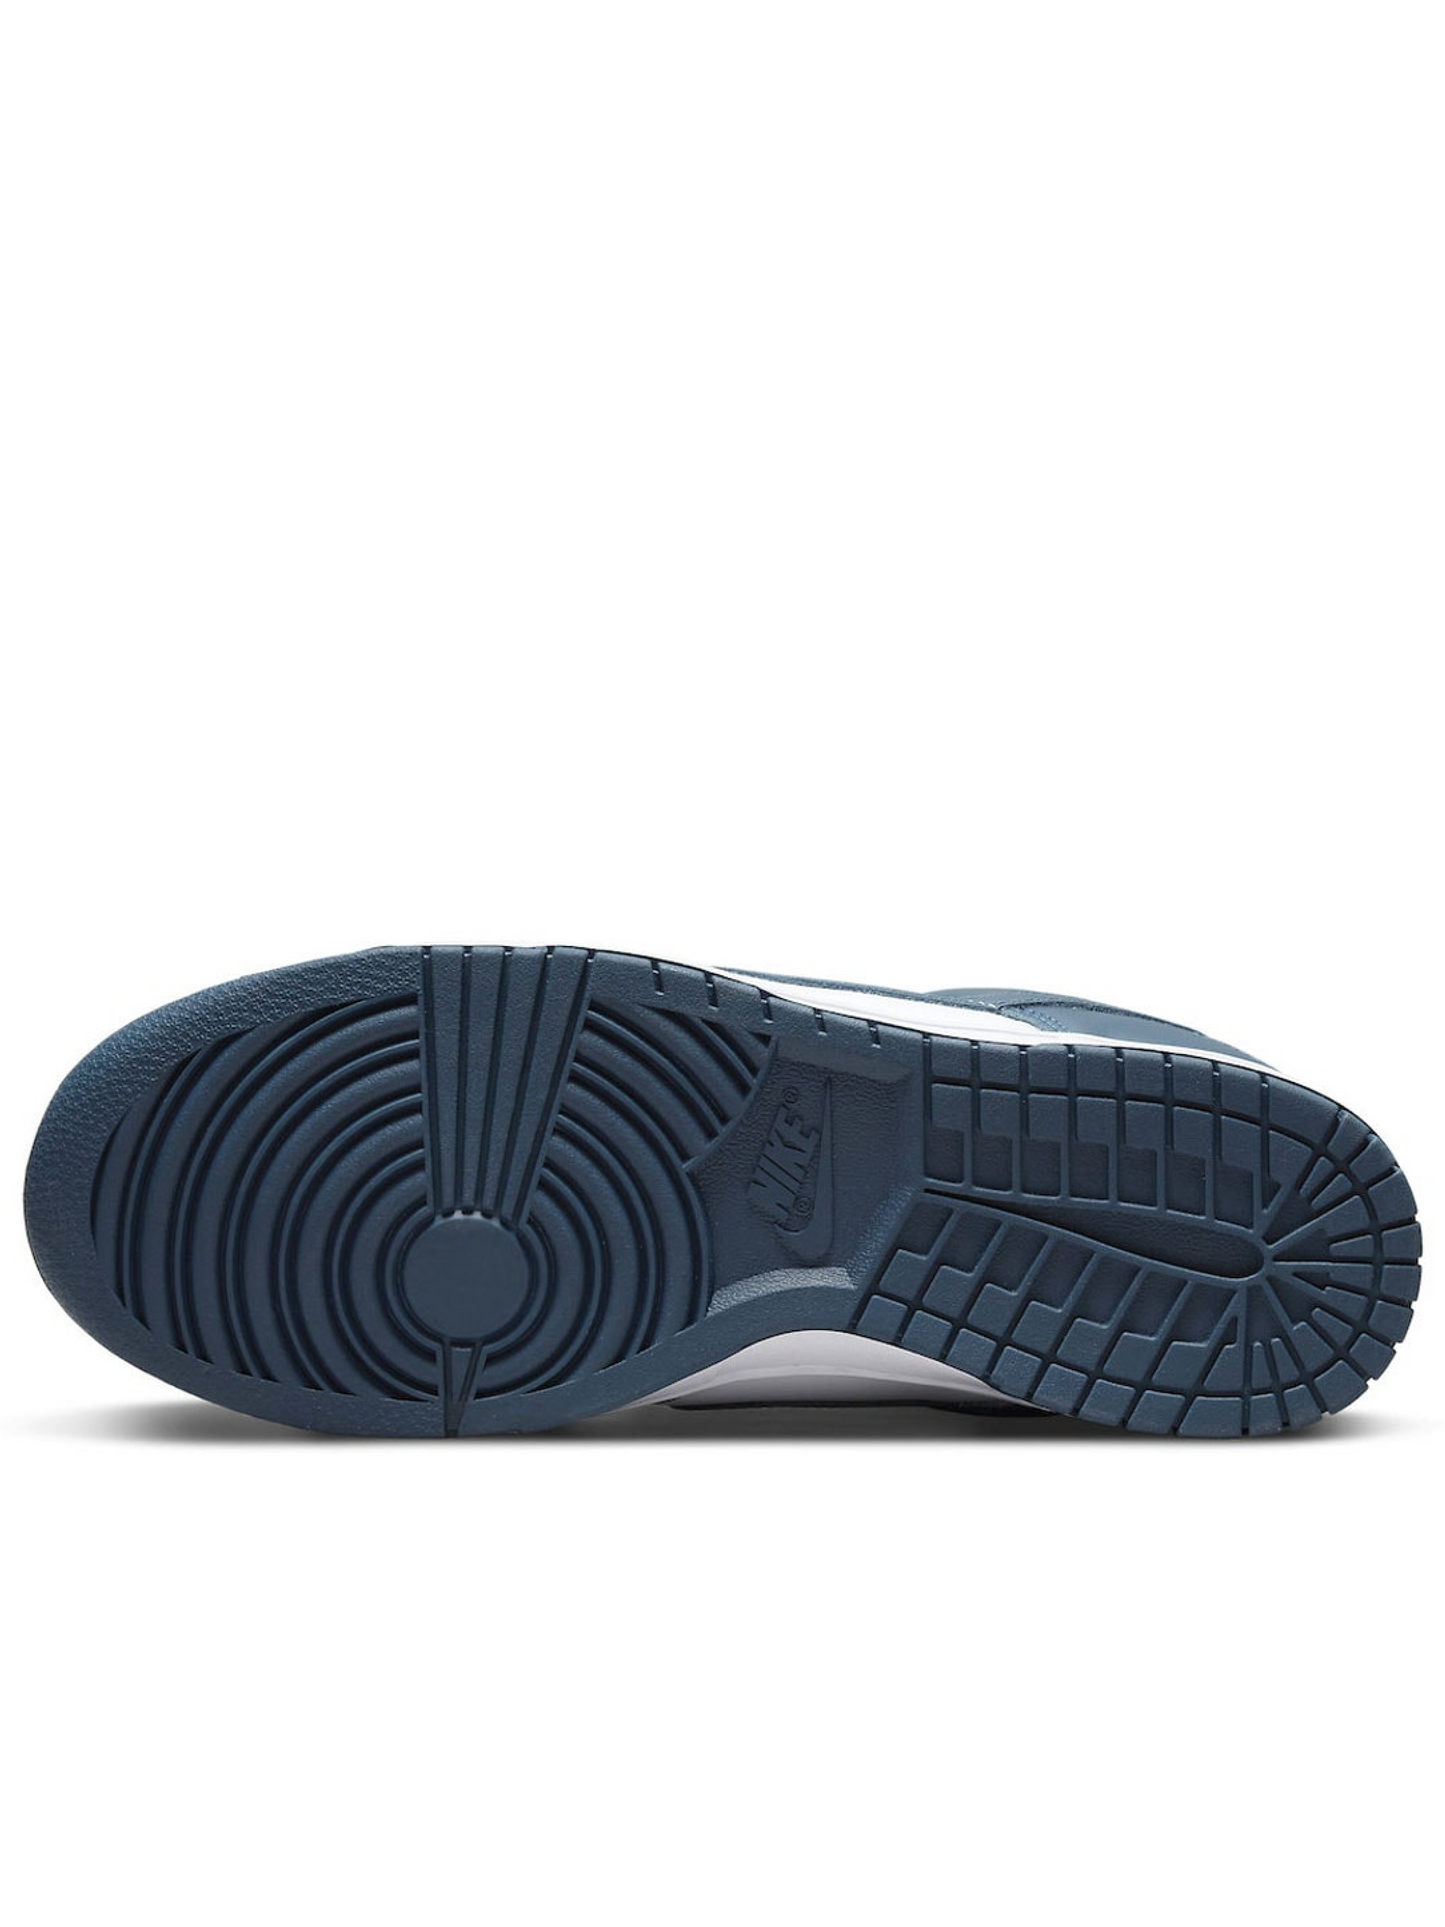 Nike Dunk Low Valerian Blue DD1391-400